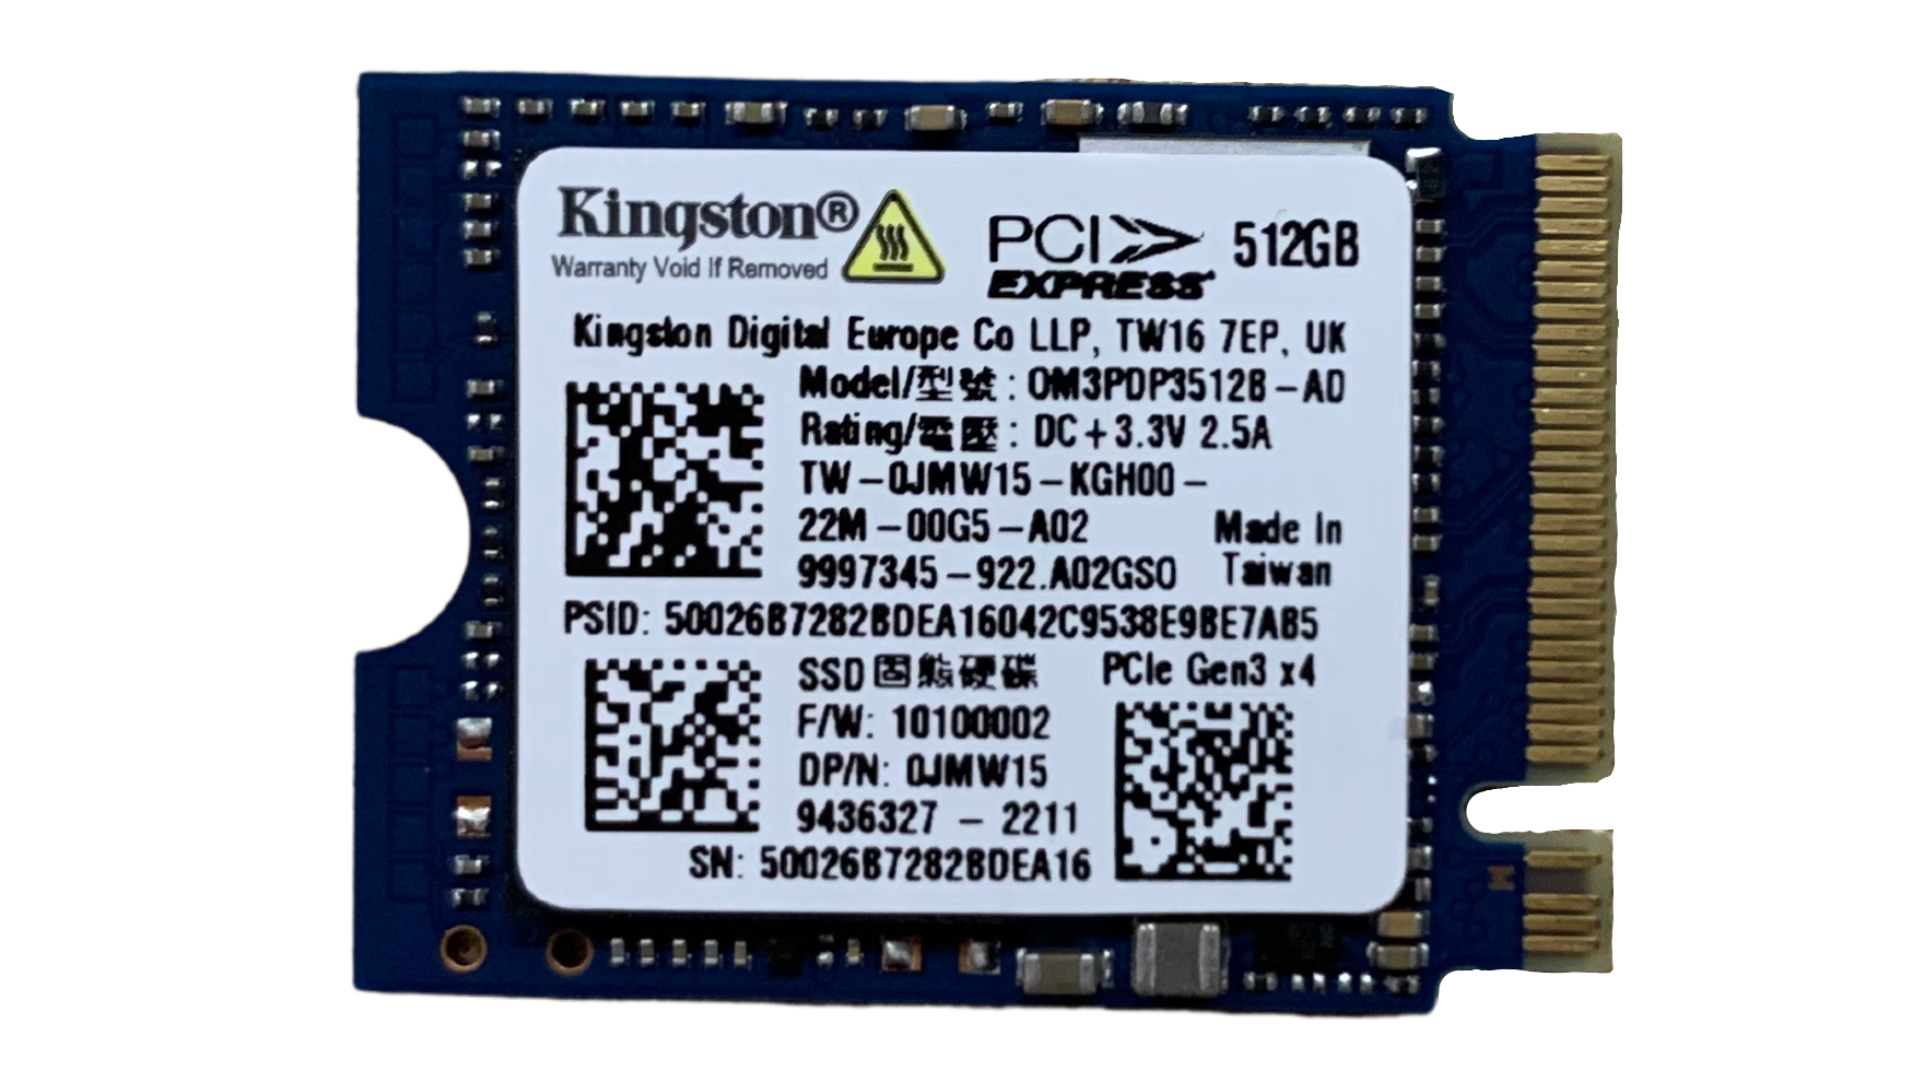 Voorkant Dell OEM Kingston OM3PDP3-AD 512GB M.2 2230 PCIe NVMe KDI SSD